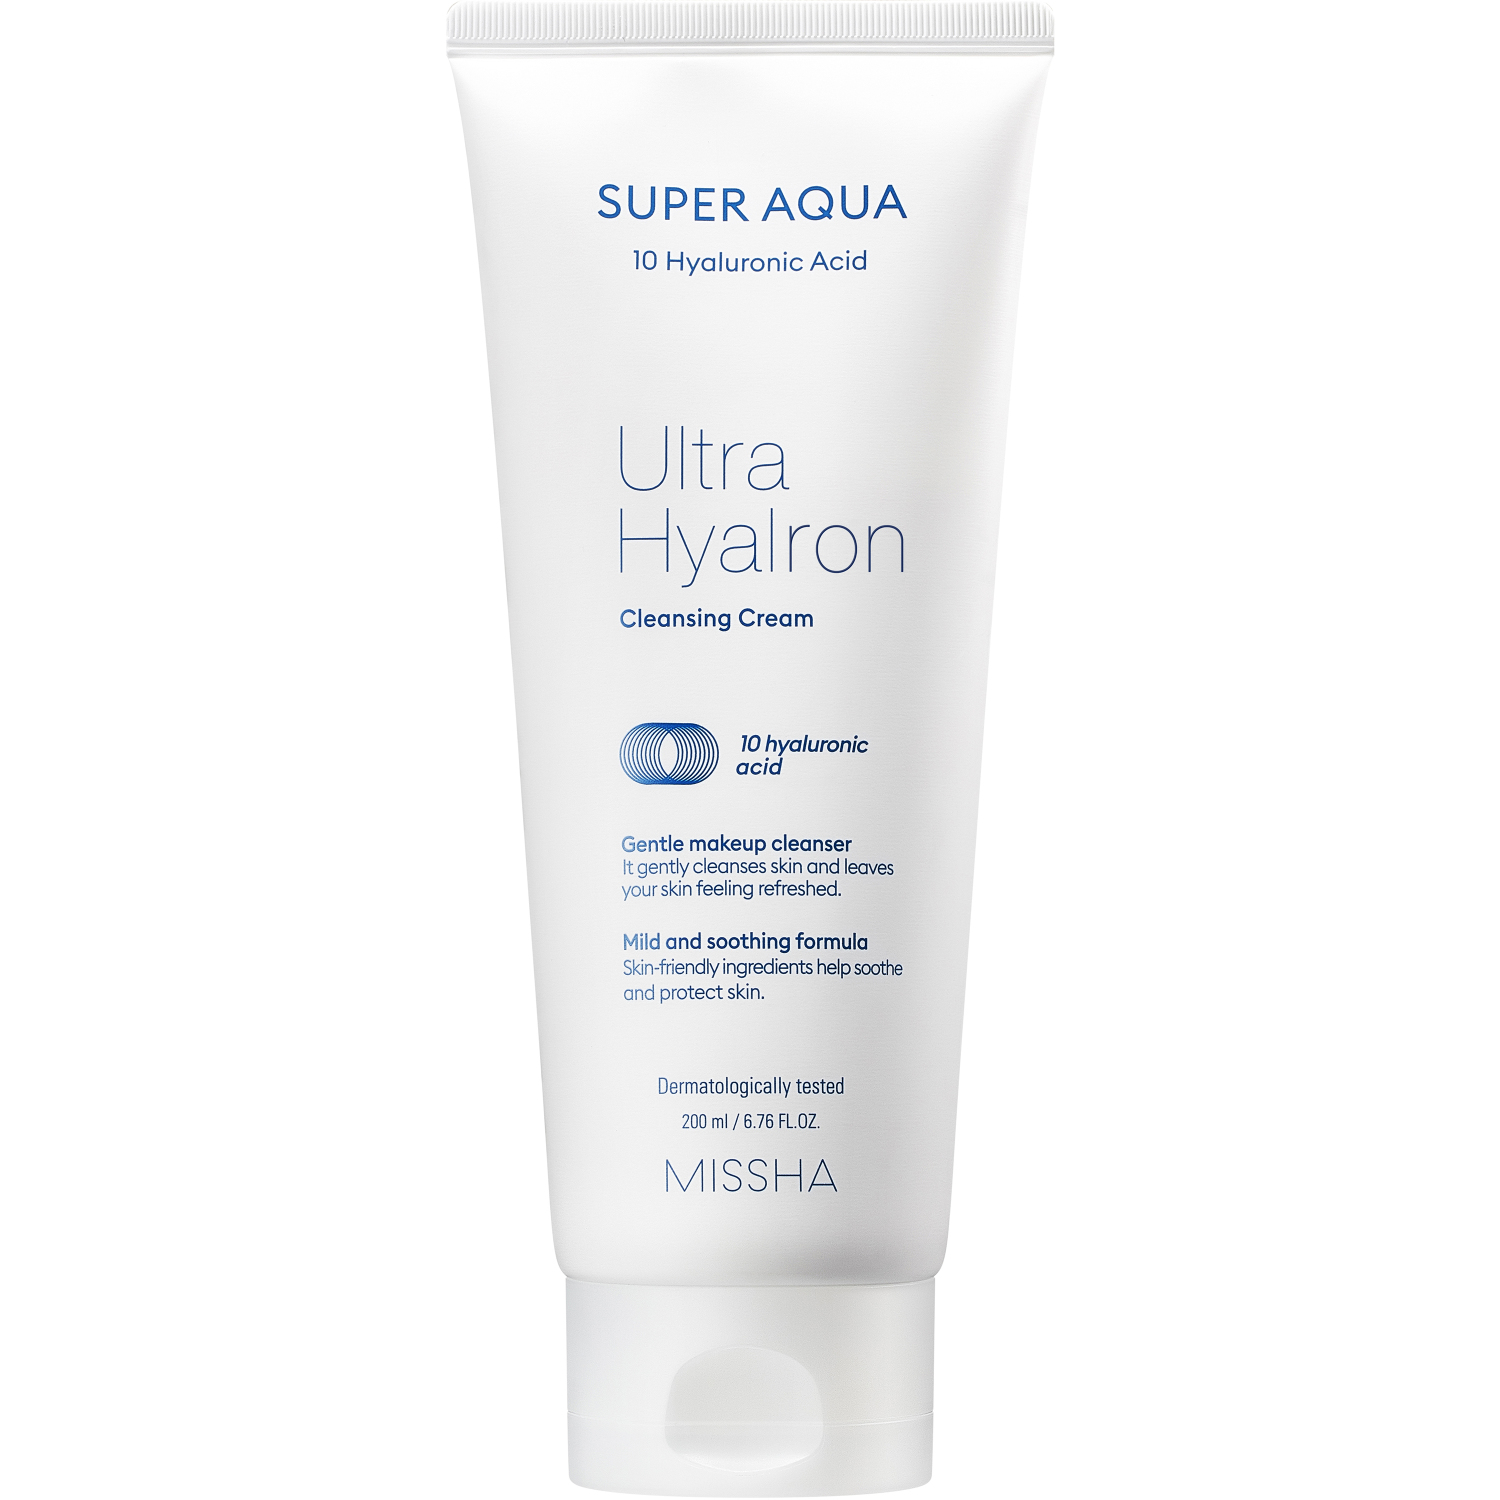 Пенка кремовая Missha Super Aqua Ultra Hyalron для умывания и снятия макияжа, 200 мл пенка для умывания 200 мл